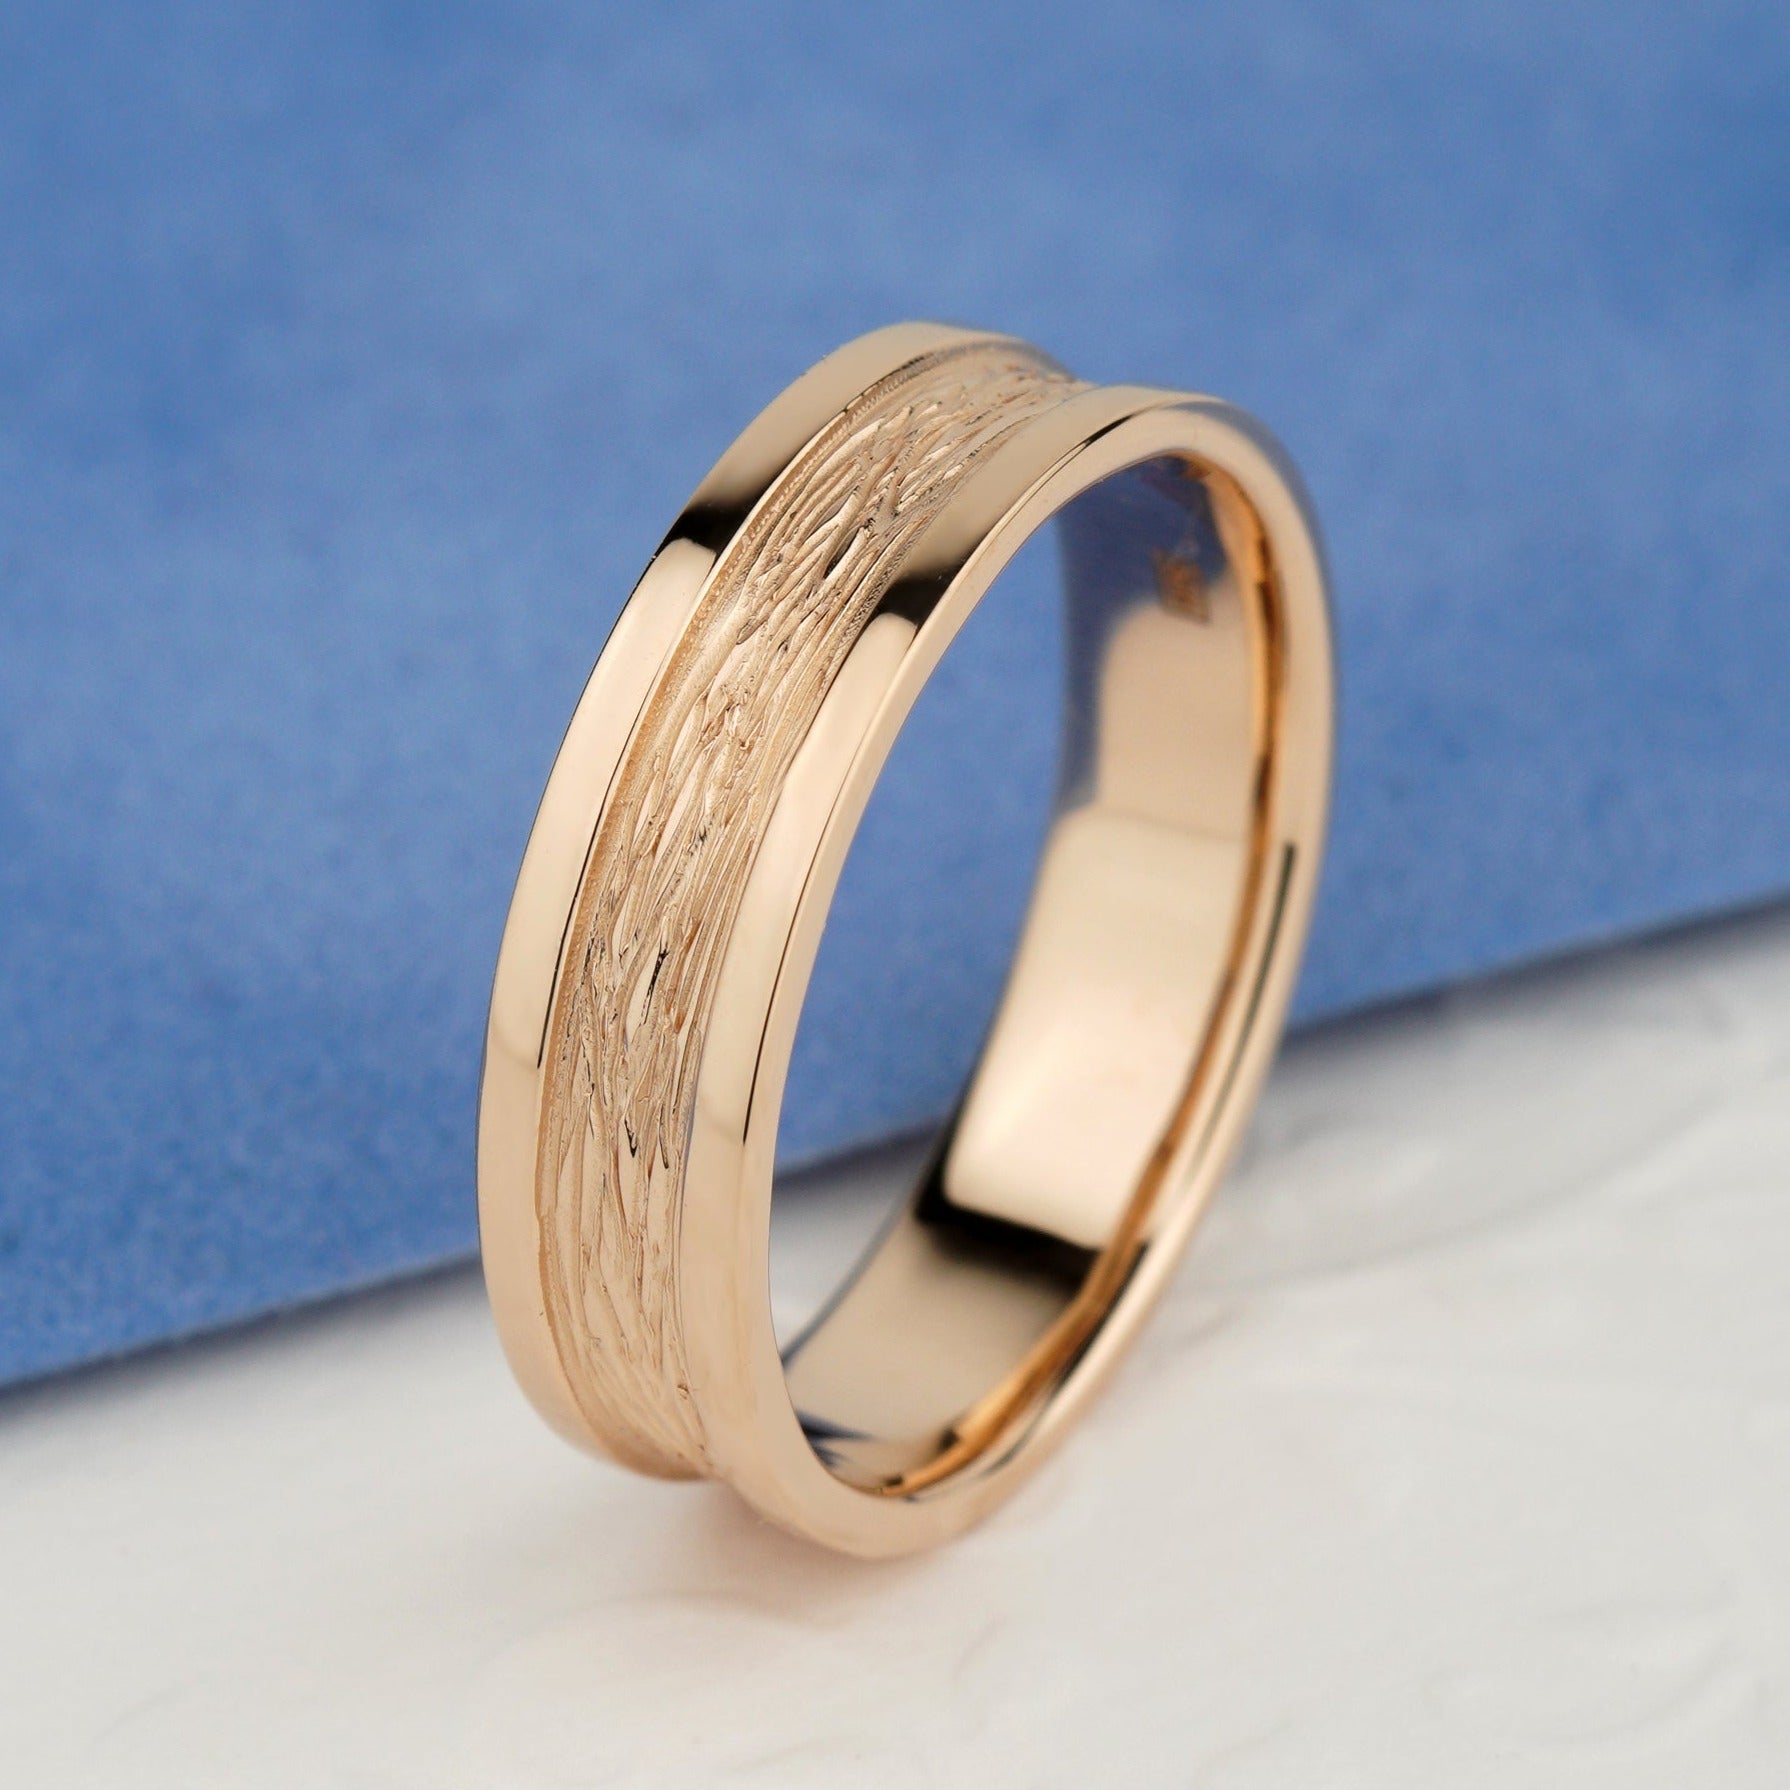 Mens wedding band rose gold. Mens wedding ring. Unique mens wedding band. 14k solid gold ring. Textured wedding bands. Male wedding ring. Ring for him. 14k gold band 6mm